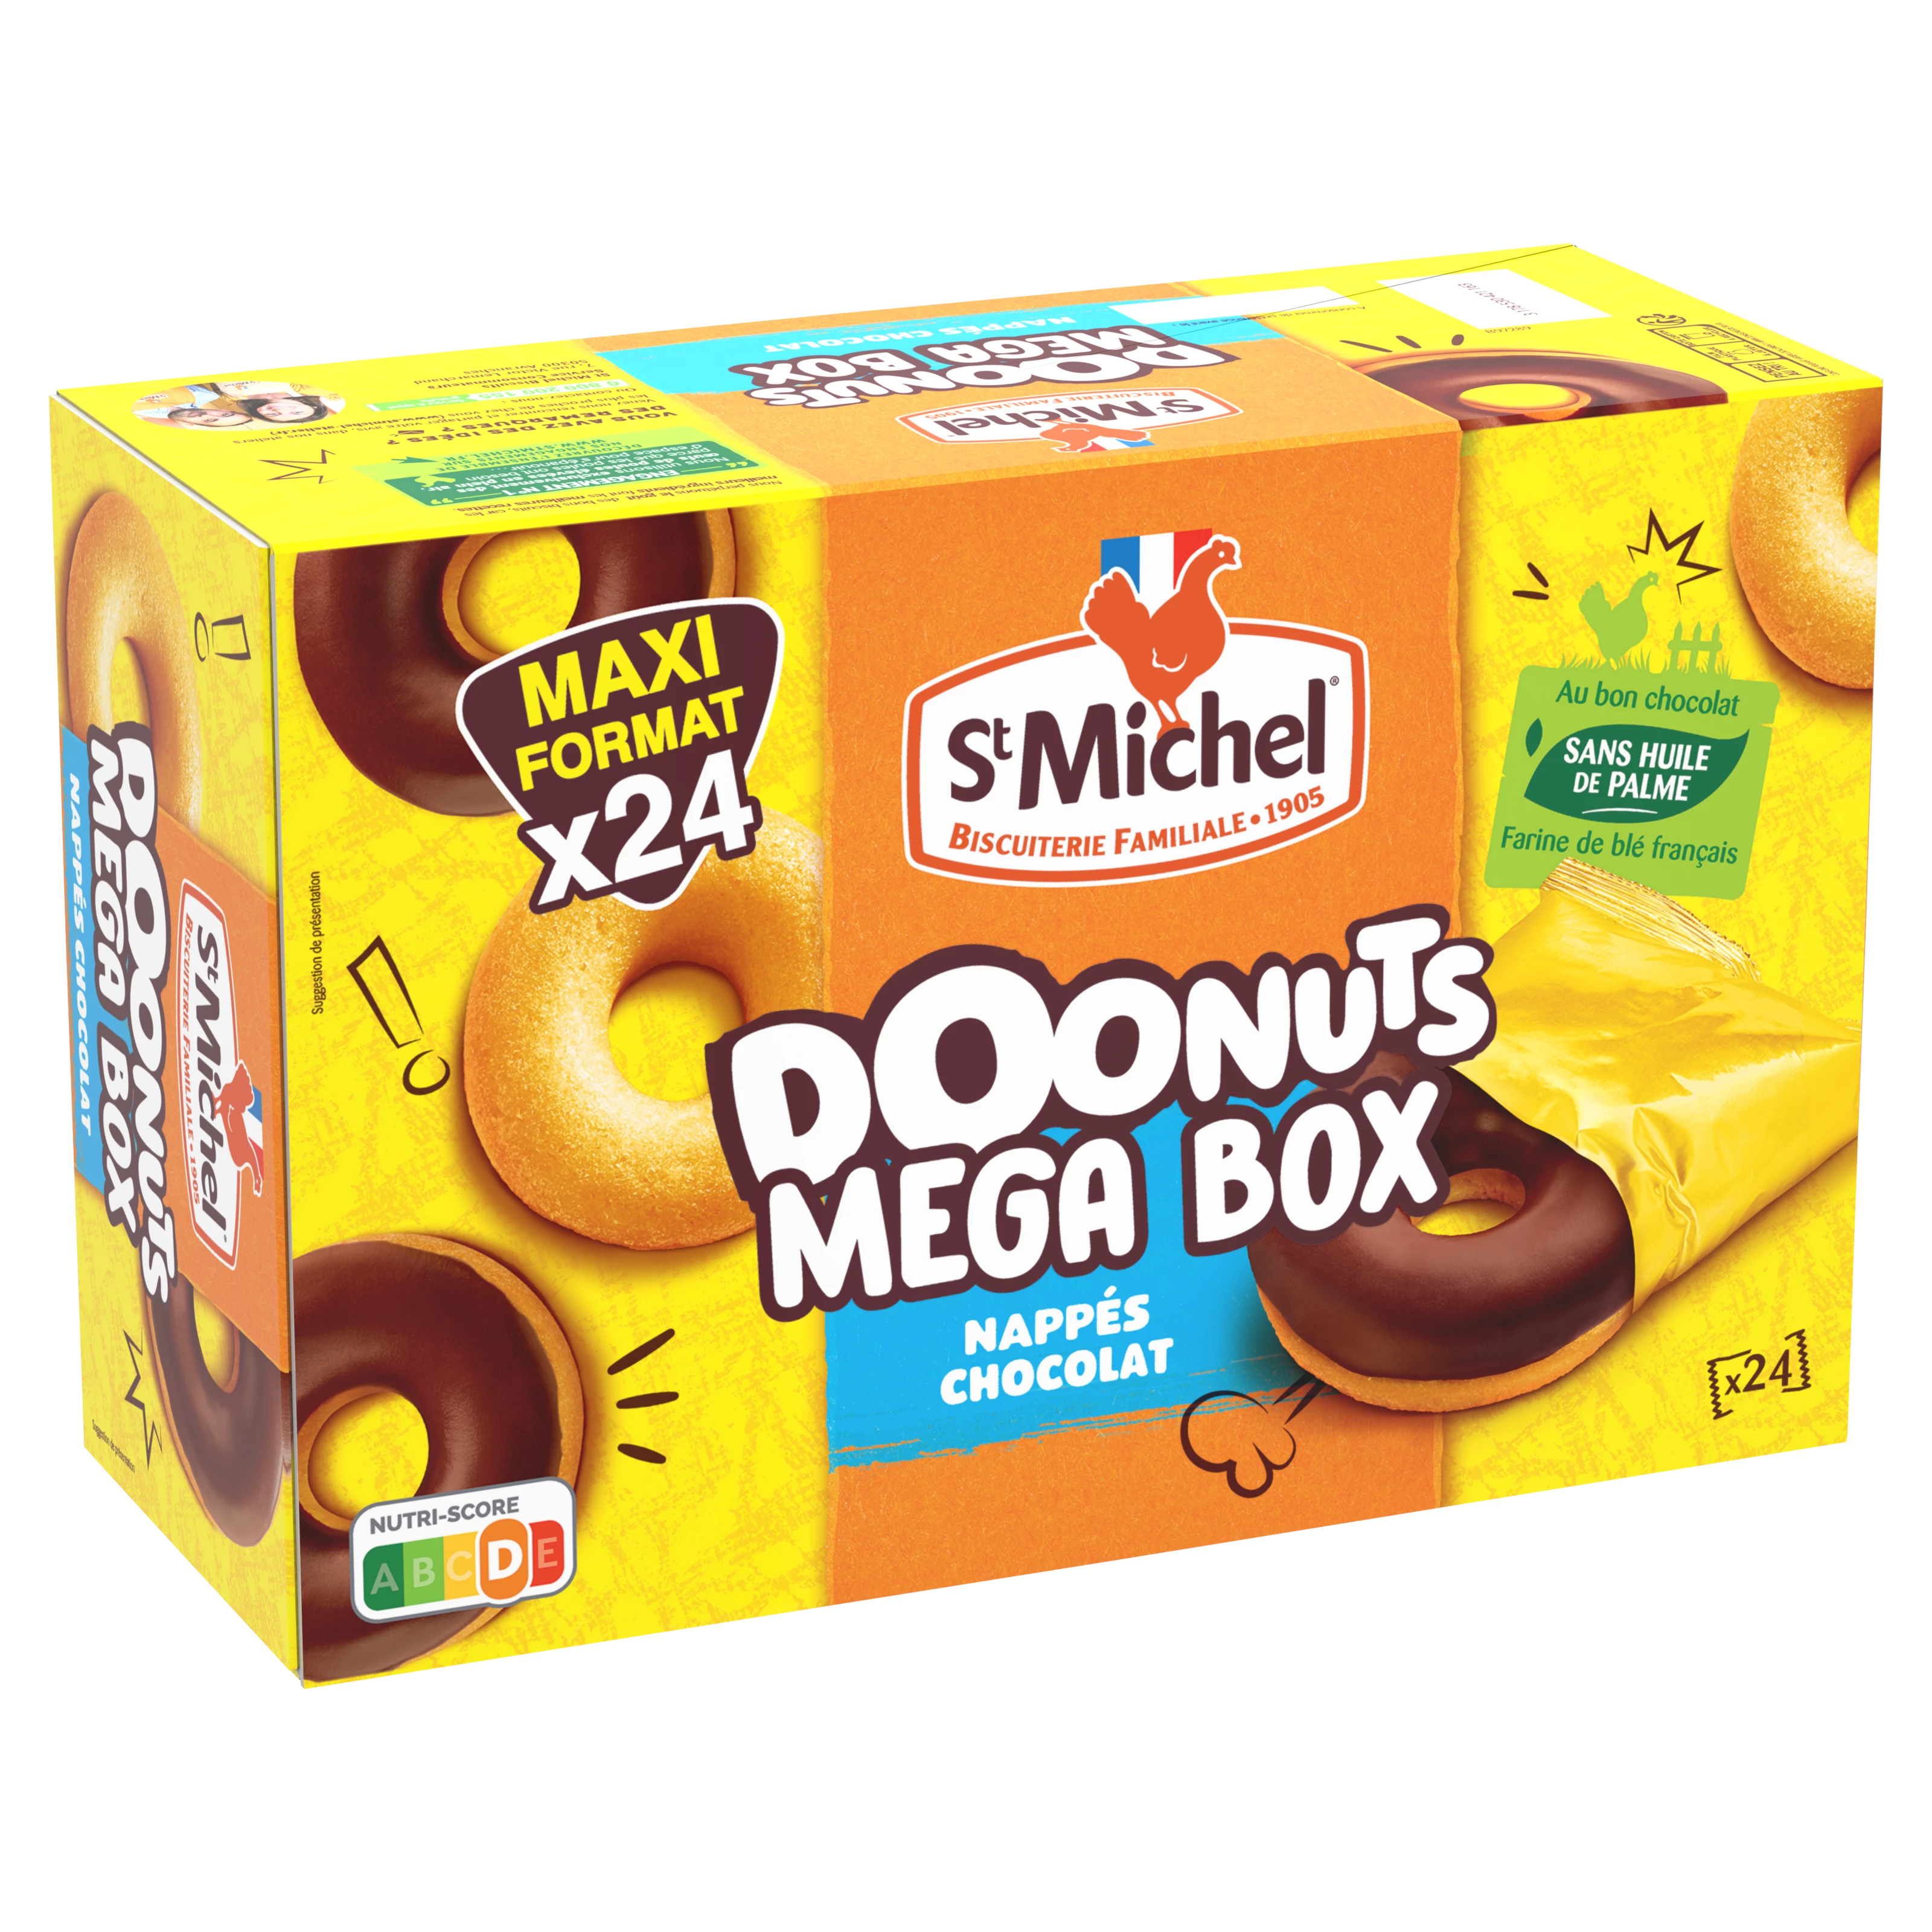 Doonuts Tine Box Luiers X24 72 - ST MICHEL